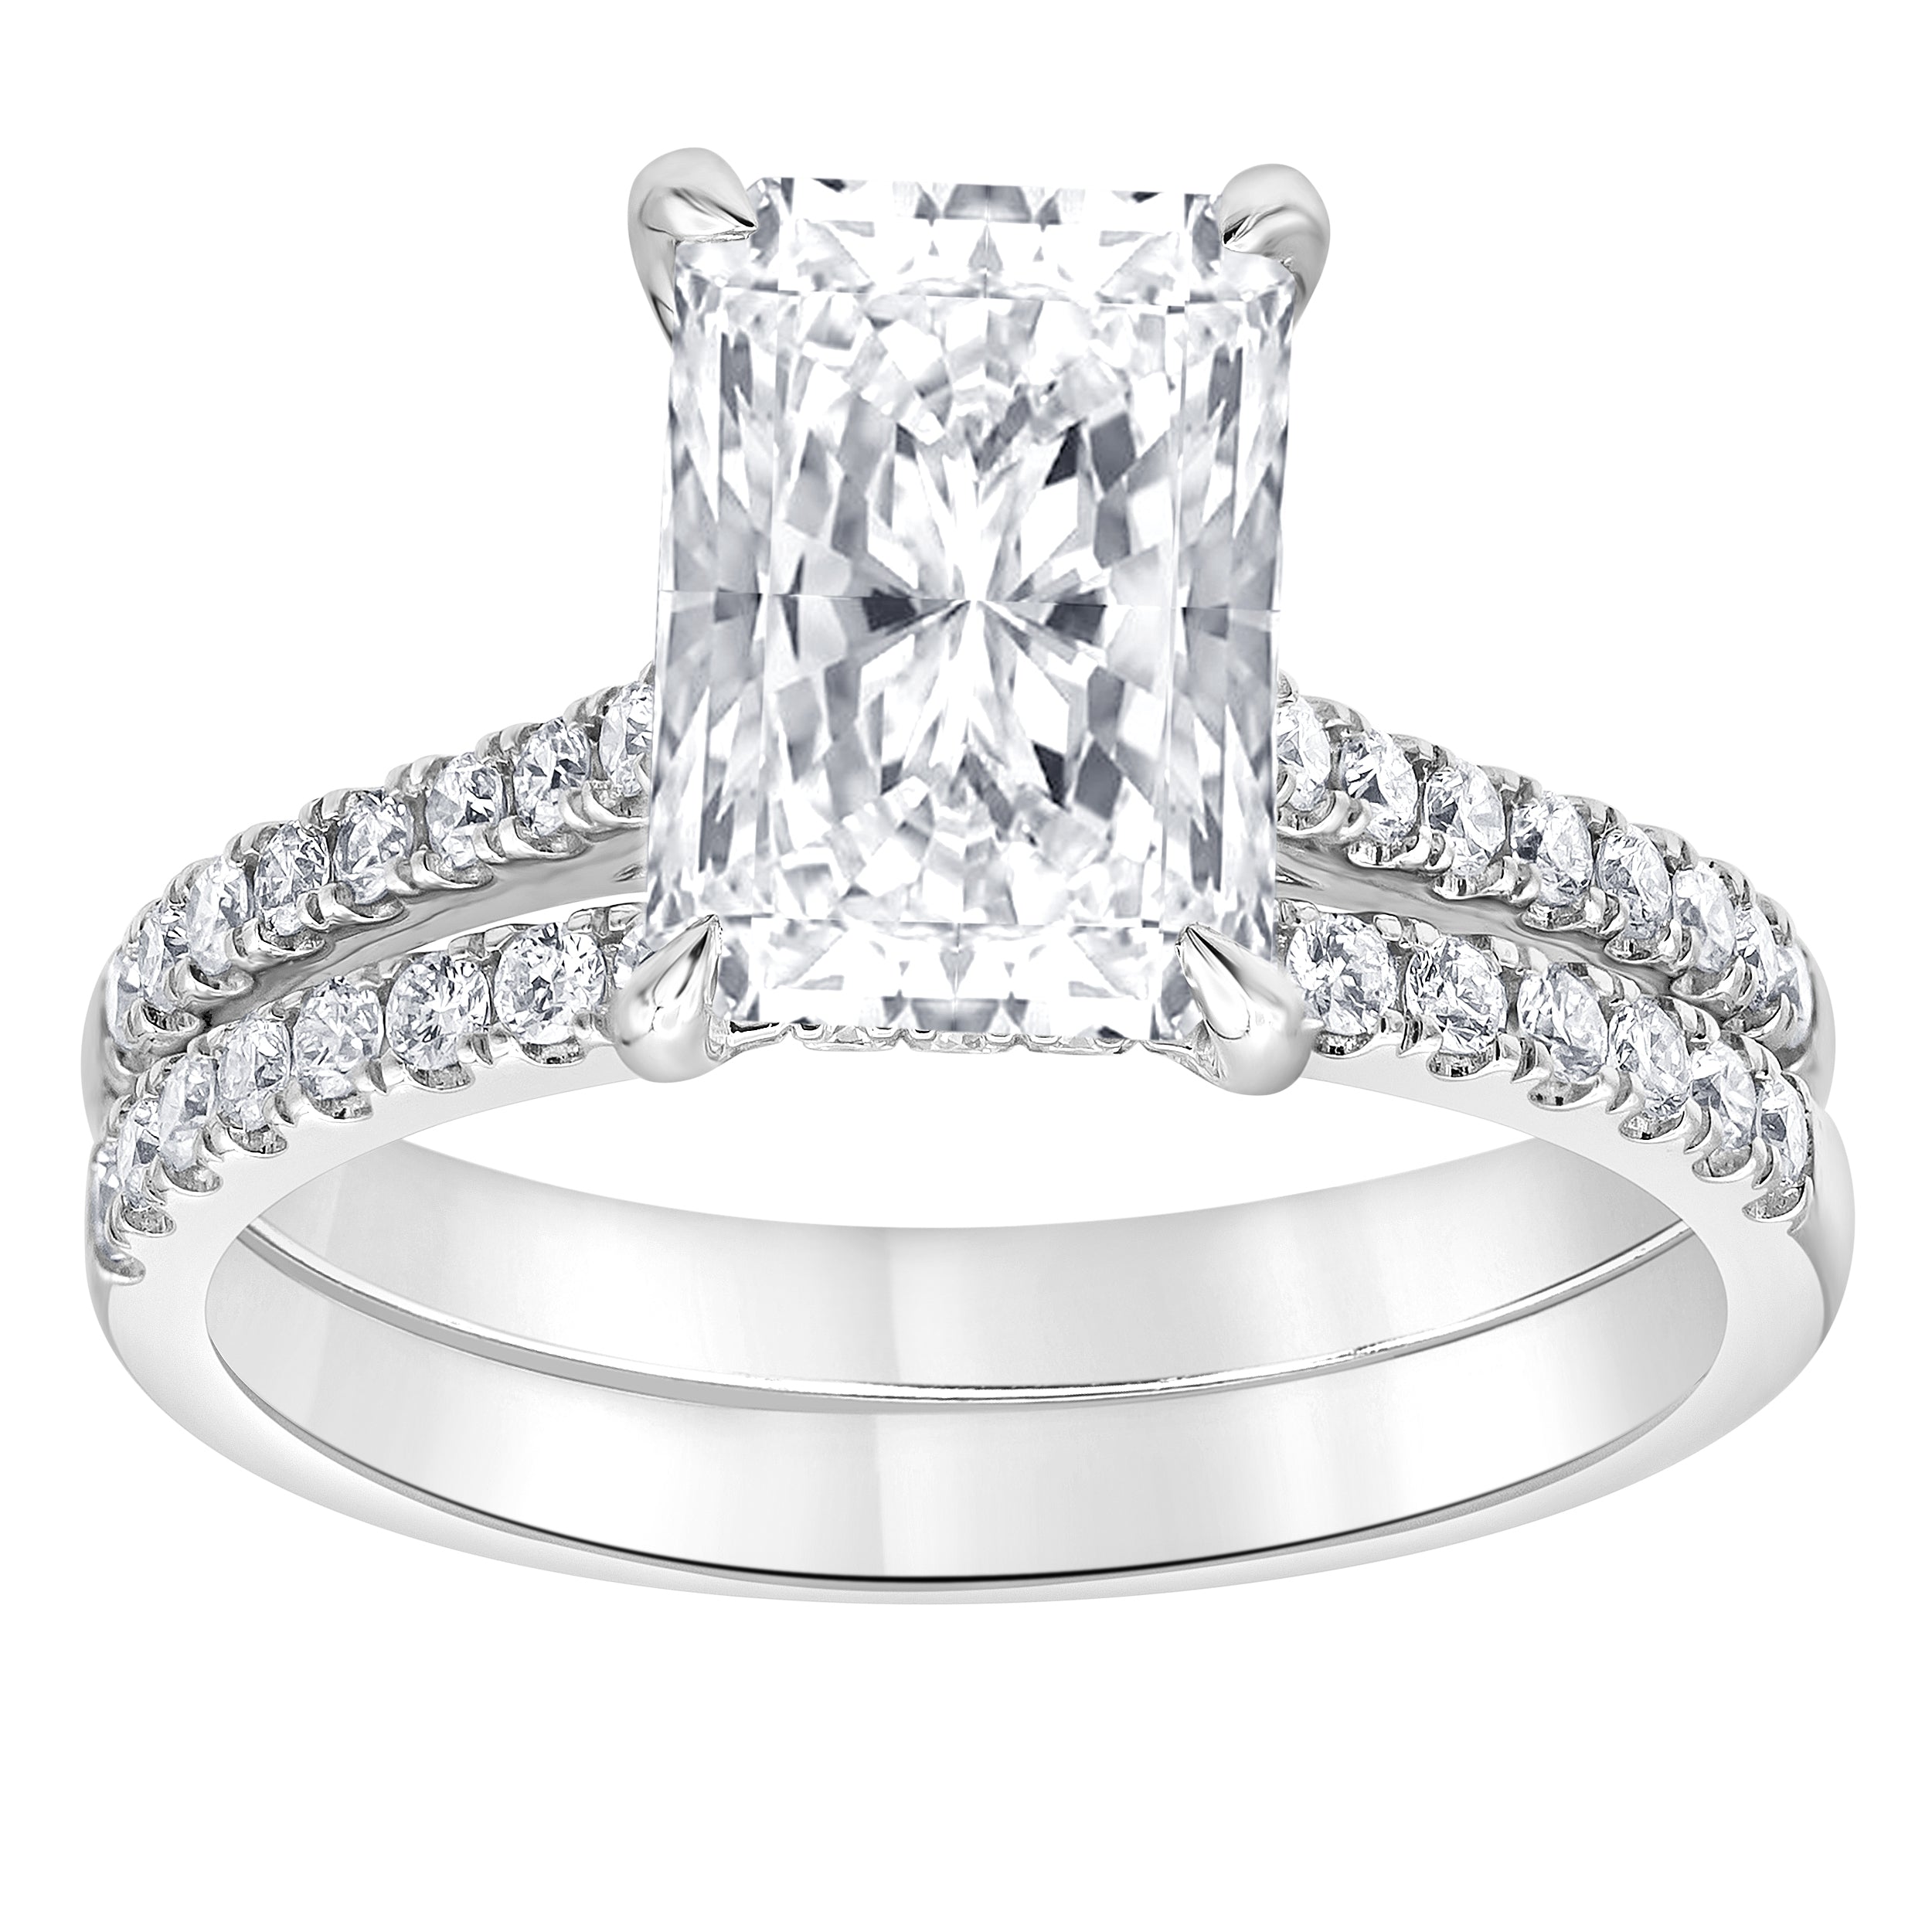 3.5 carat Radiant Hidden Halo Diamond Ring